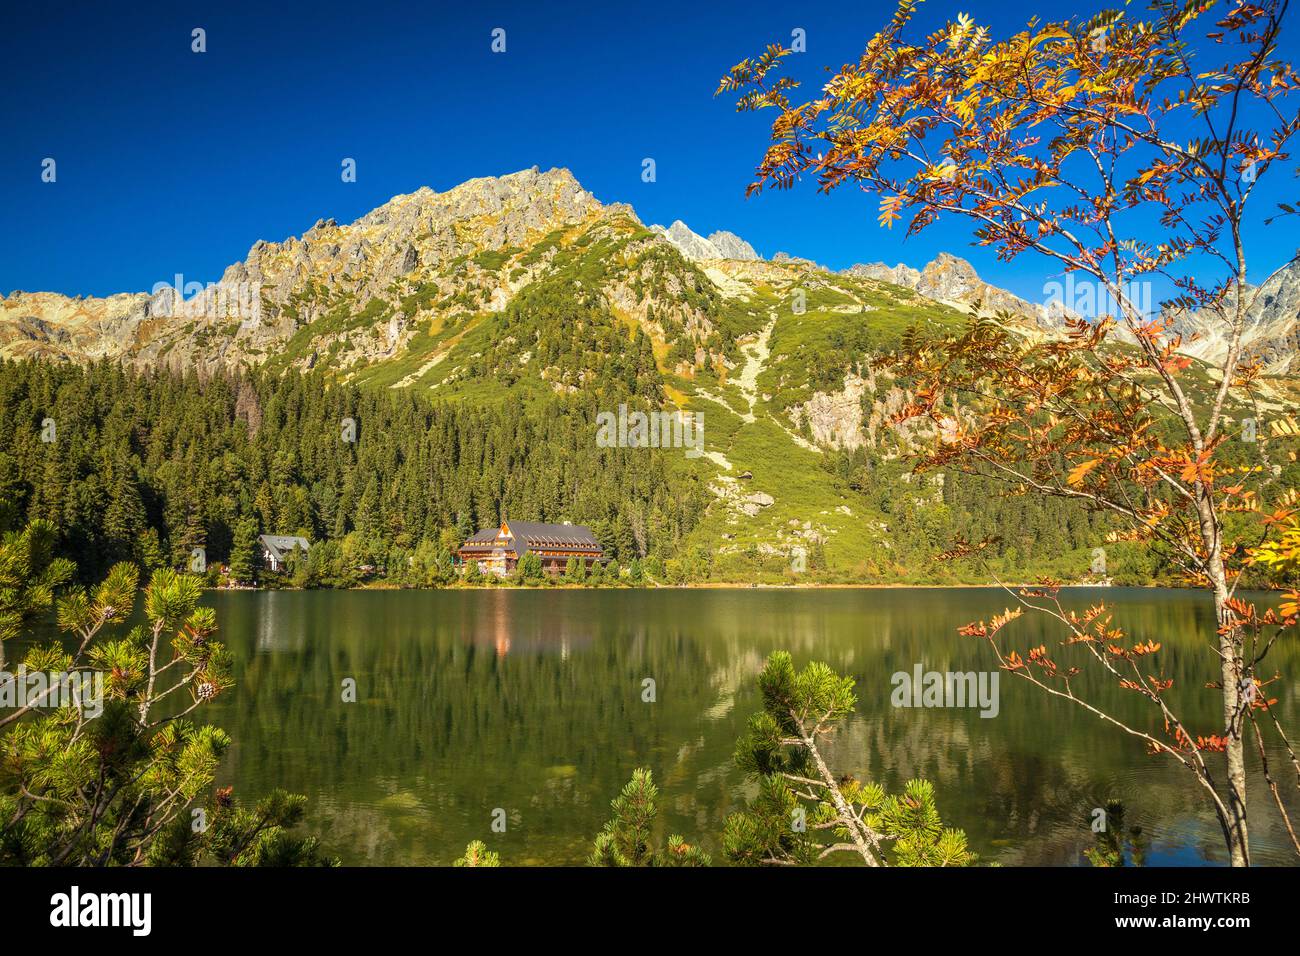 Mountain landscape at autumn season. The Popradske pleso lake in High Tatras National Park, Slovakia, Europe. Stock Photo